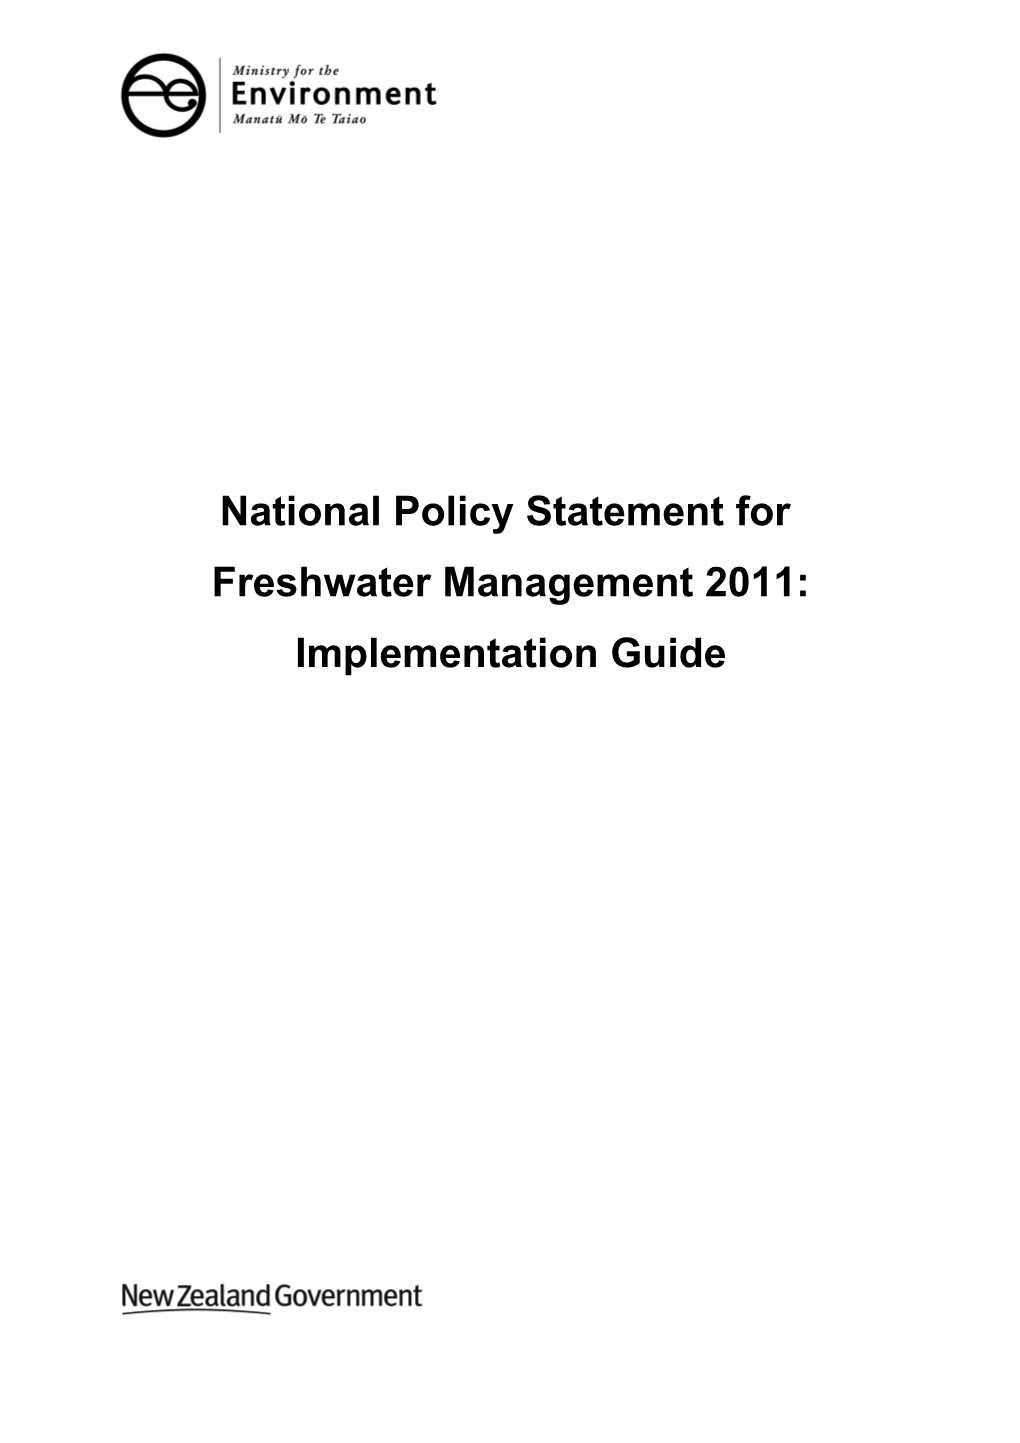 Nps-Freshwater-Management-Implementation-Guide Final